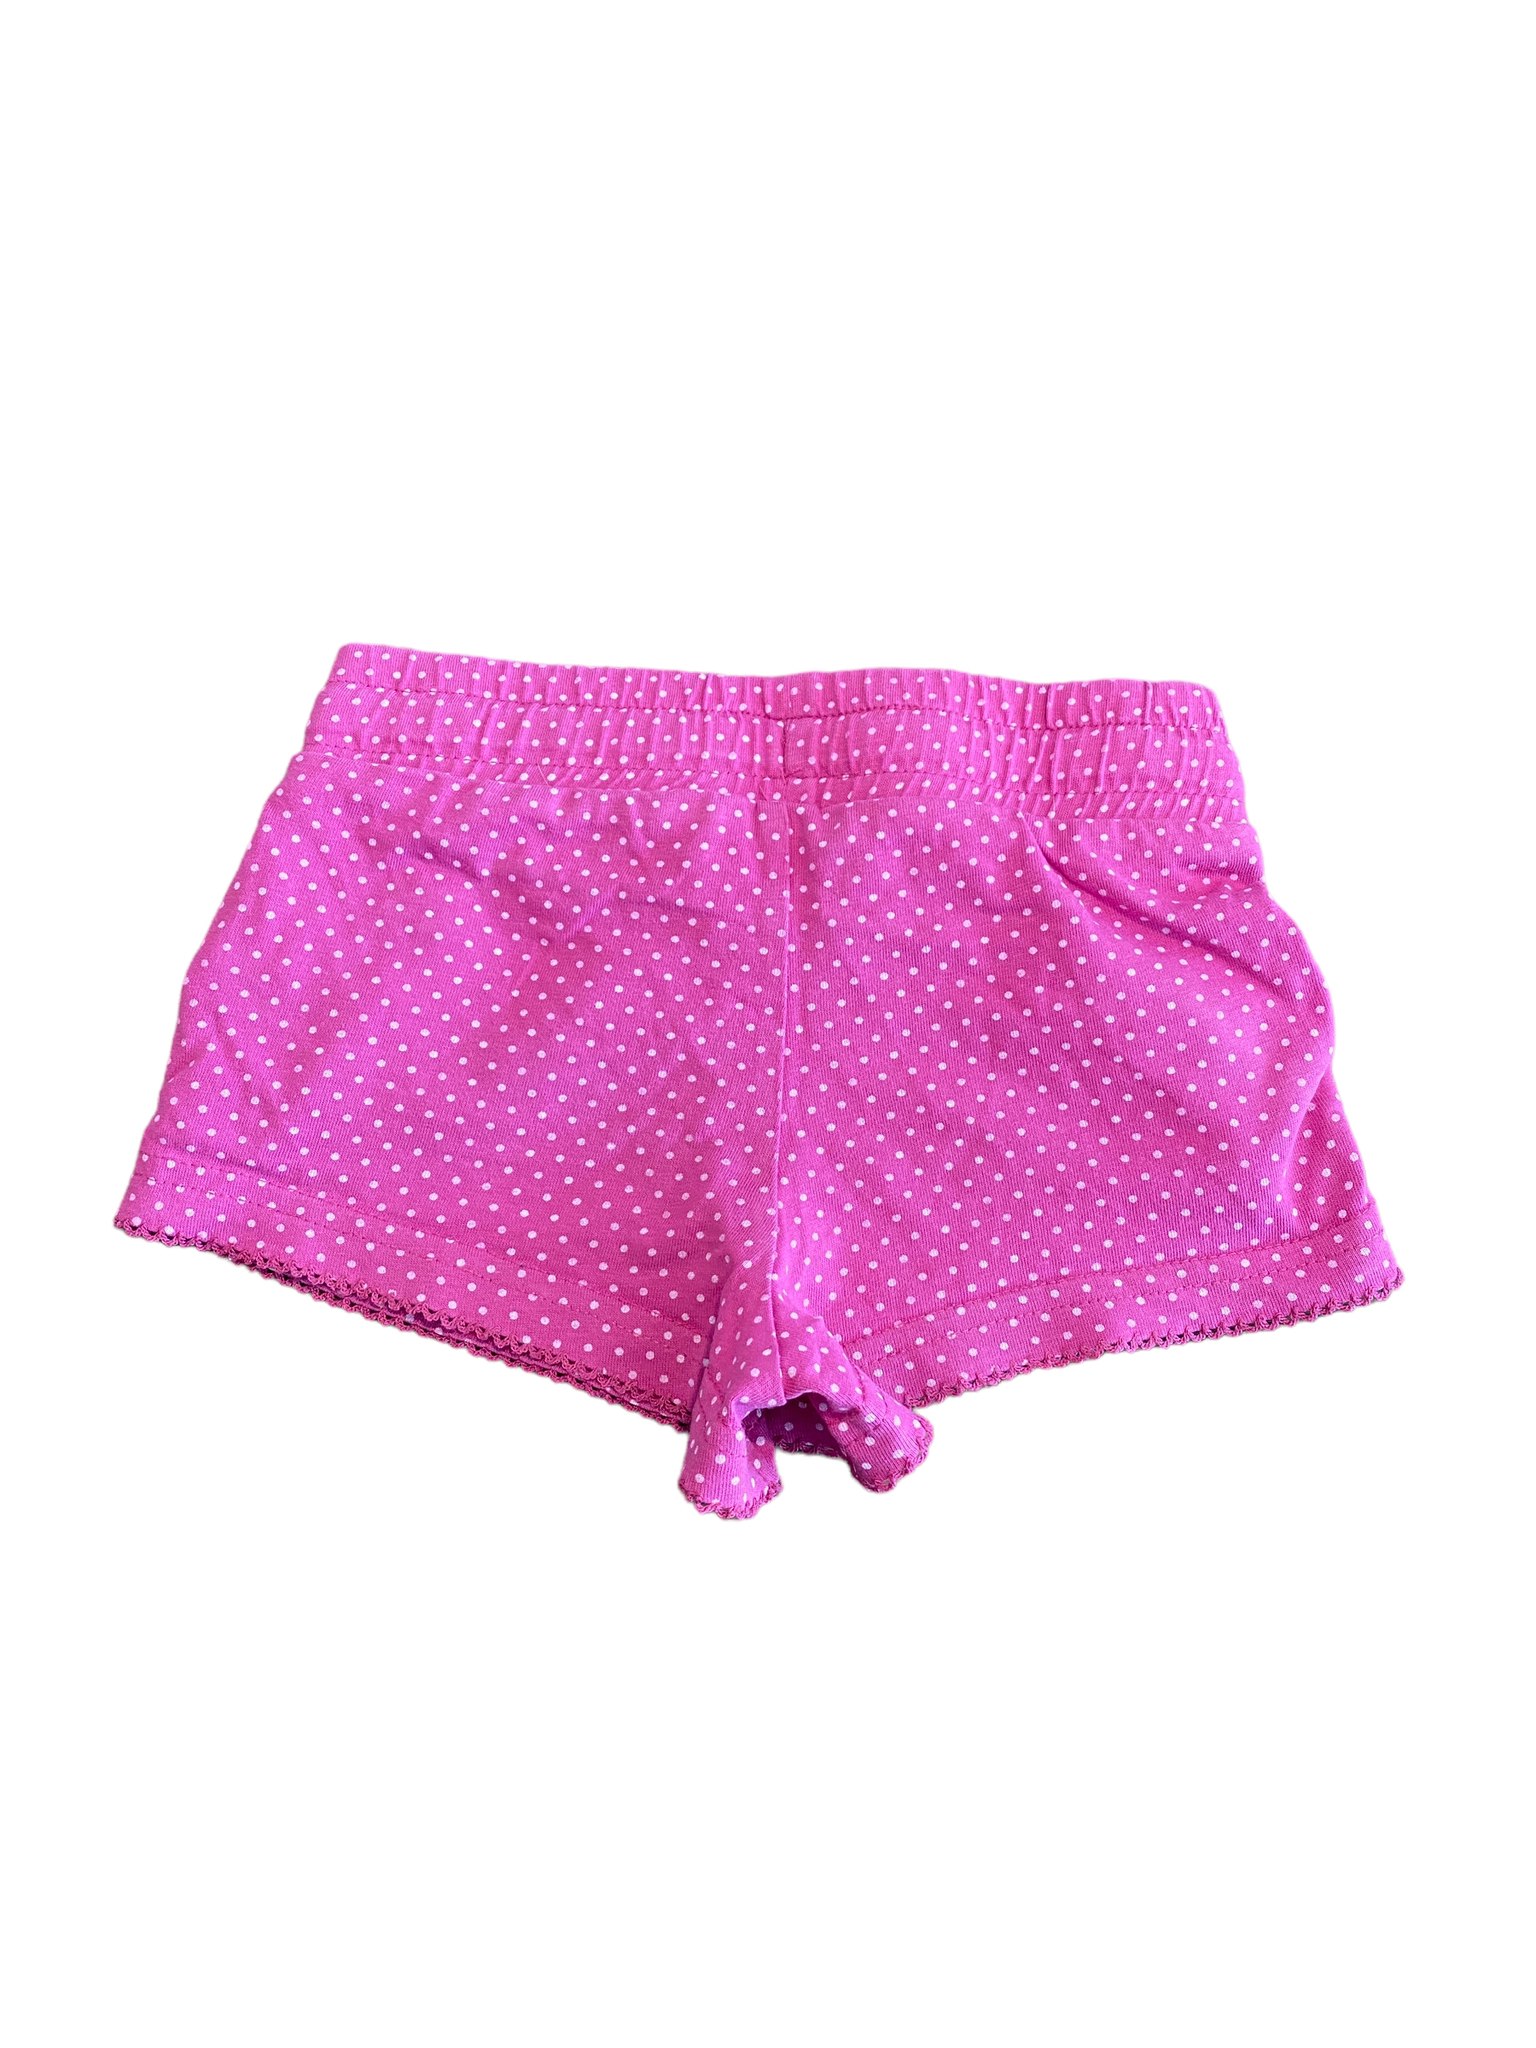 Prickiga shorts, Casual girls wear, stl 98/104